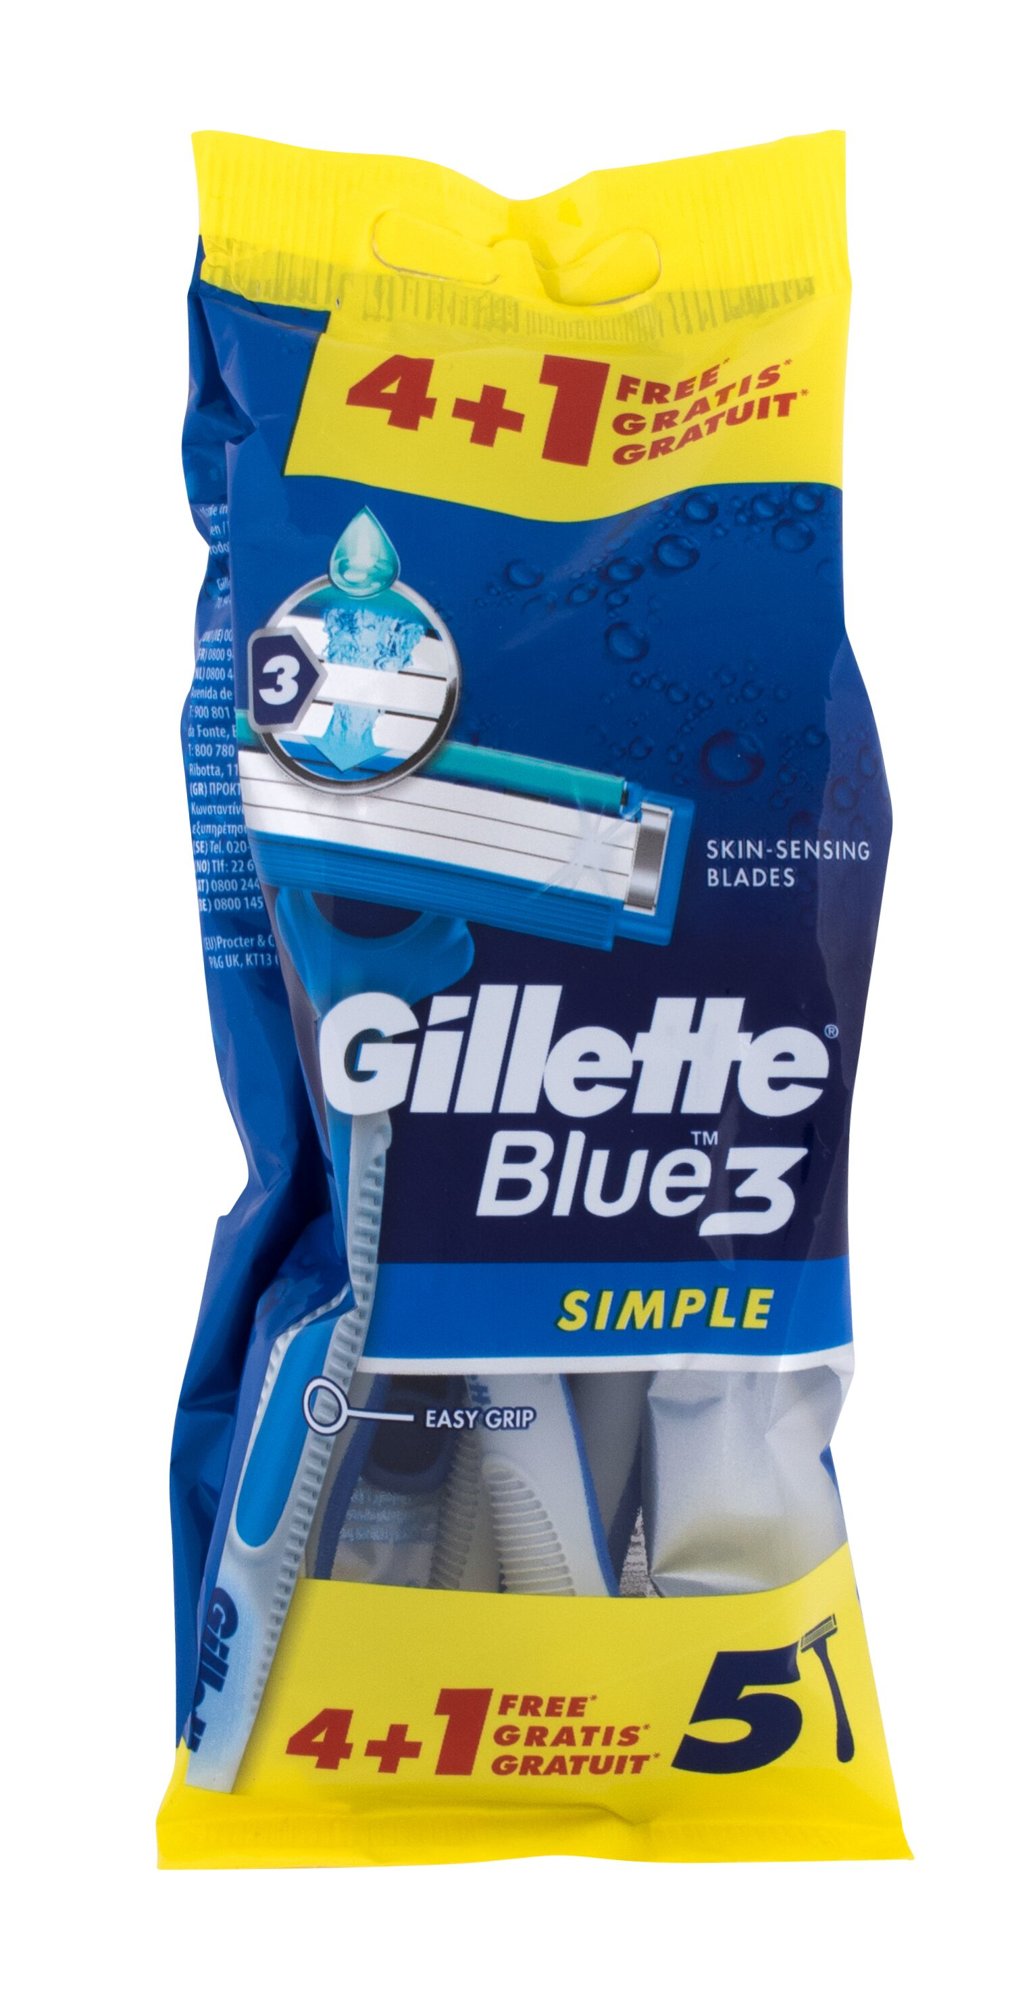 Gillette Blue3 Simple skustuvas